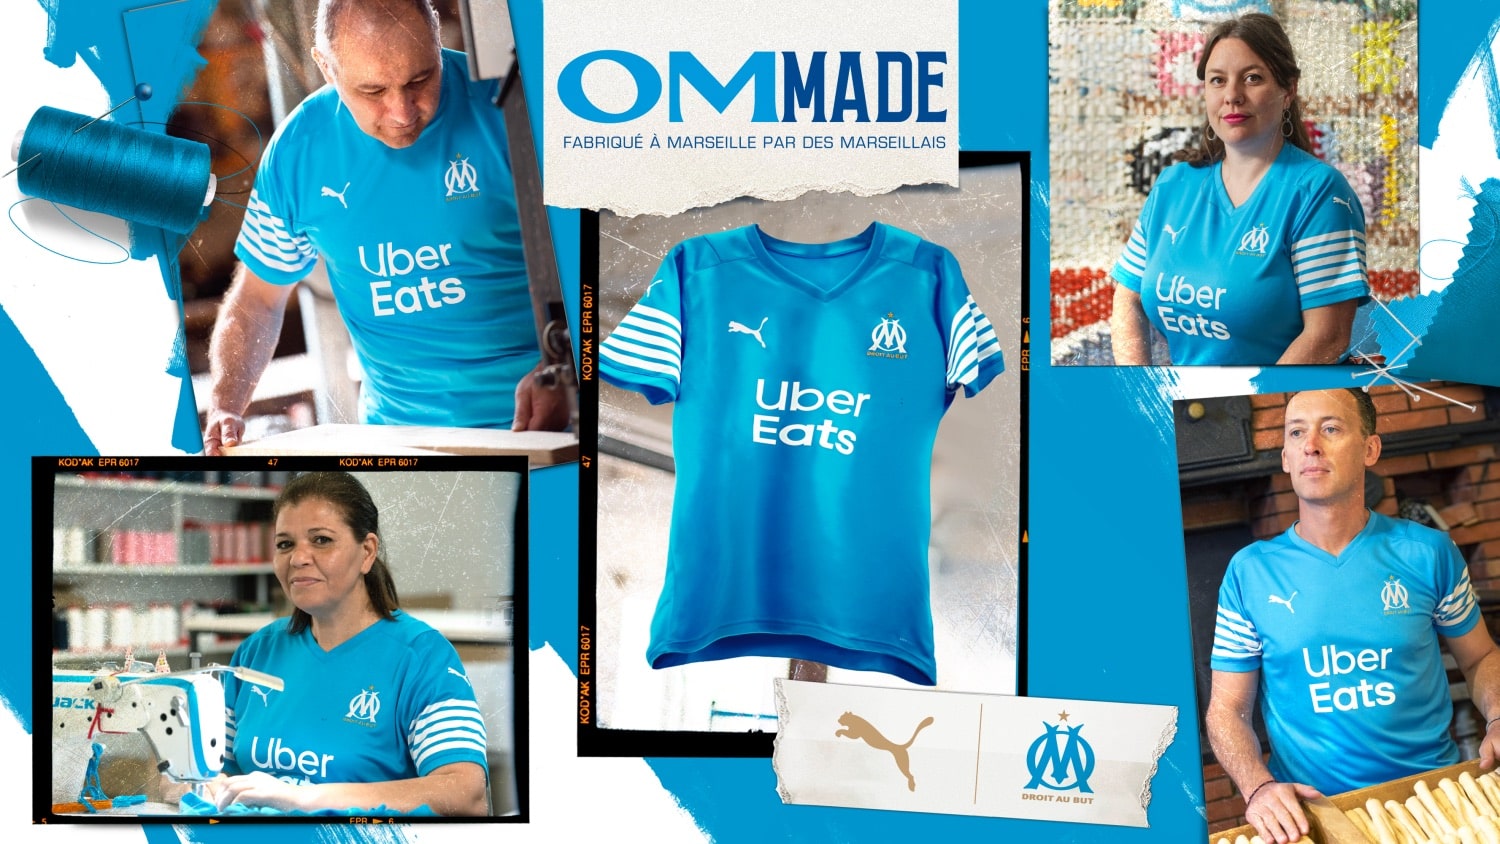 OM, L&#8217;OM et PUMA dévoilent leur maillot collector « OM Made » fabriqué à Marseille, Made in Marseille